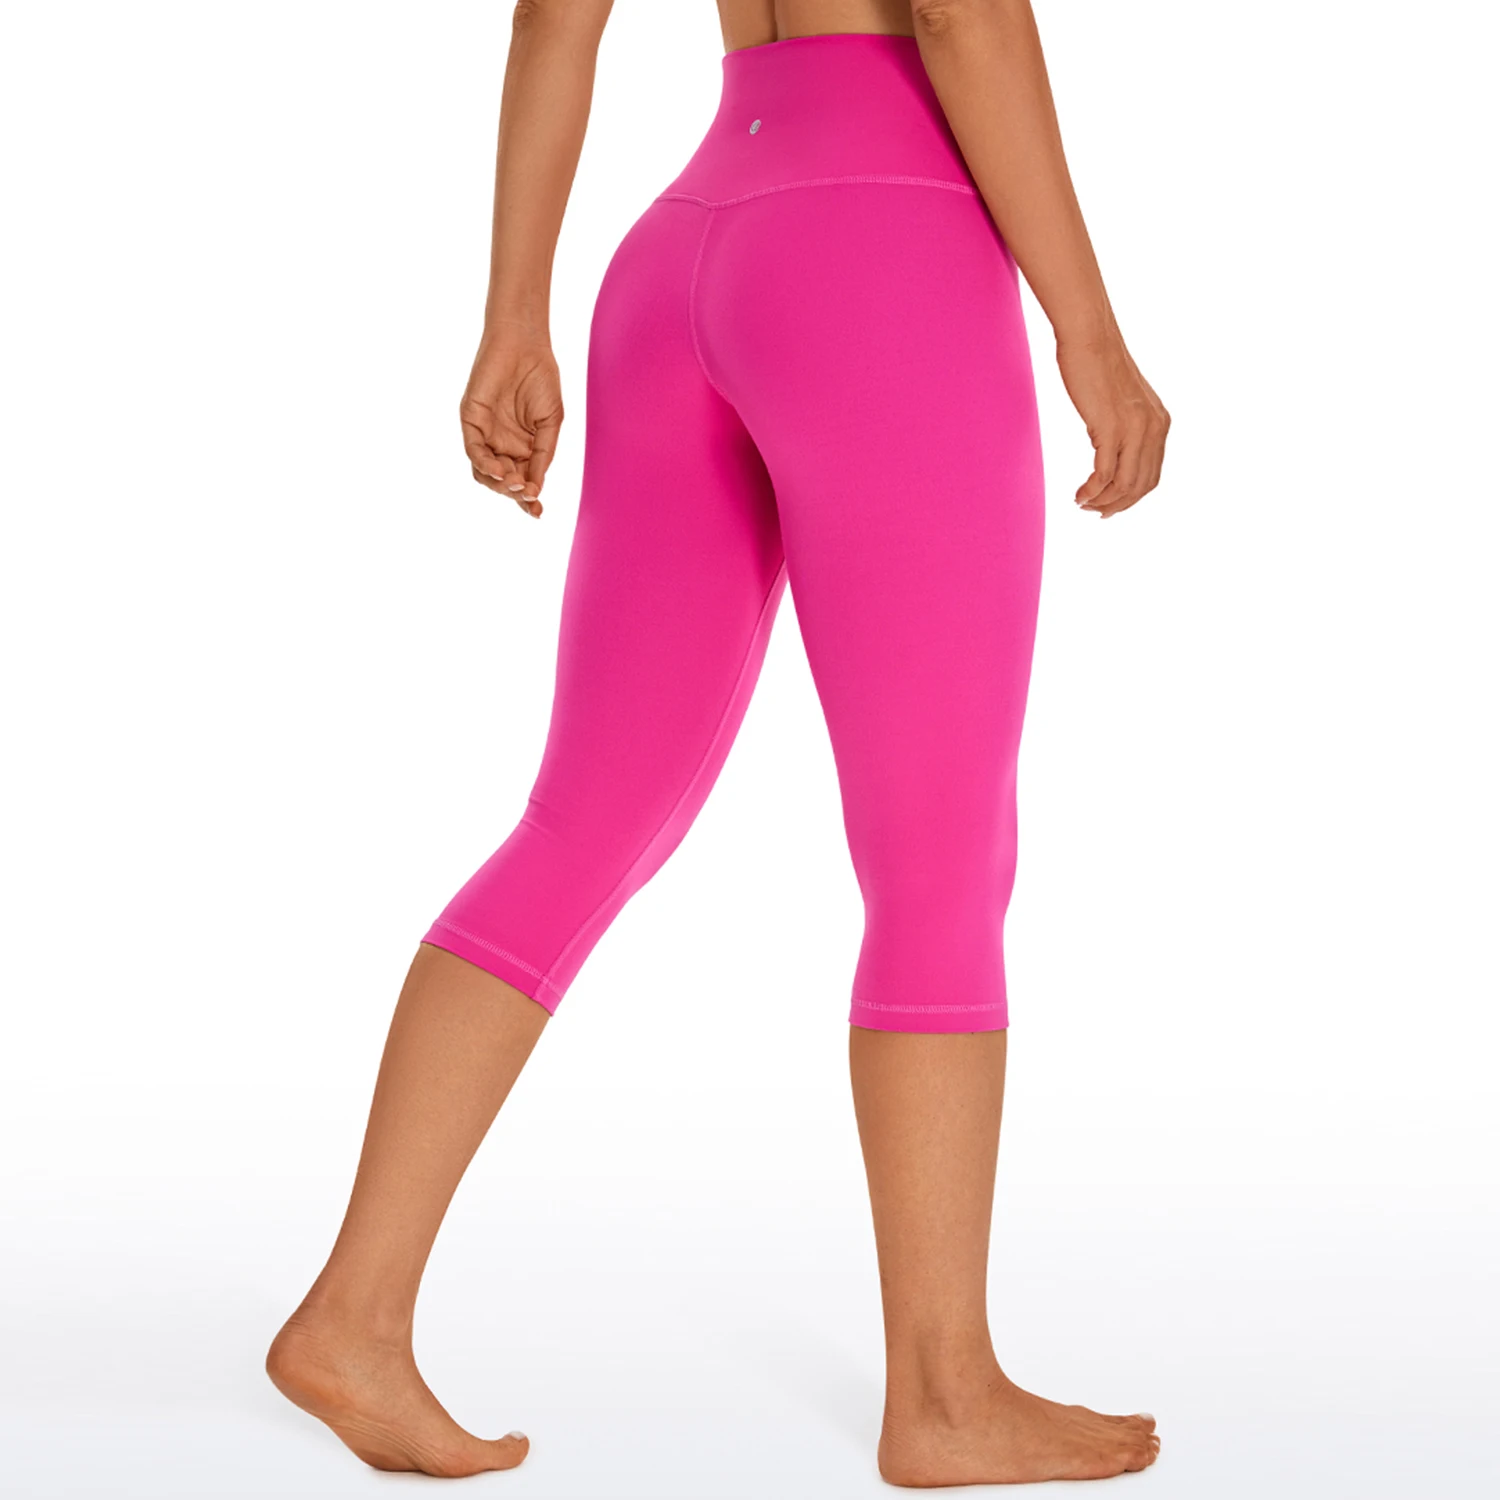 Buy CRZ YOGAWomen's Butterluxe Capri Workout Leggings - 13 High